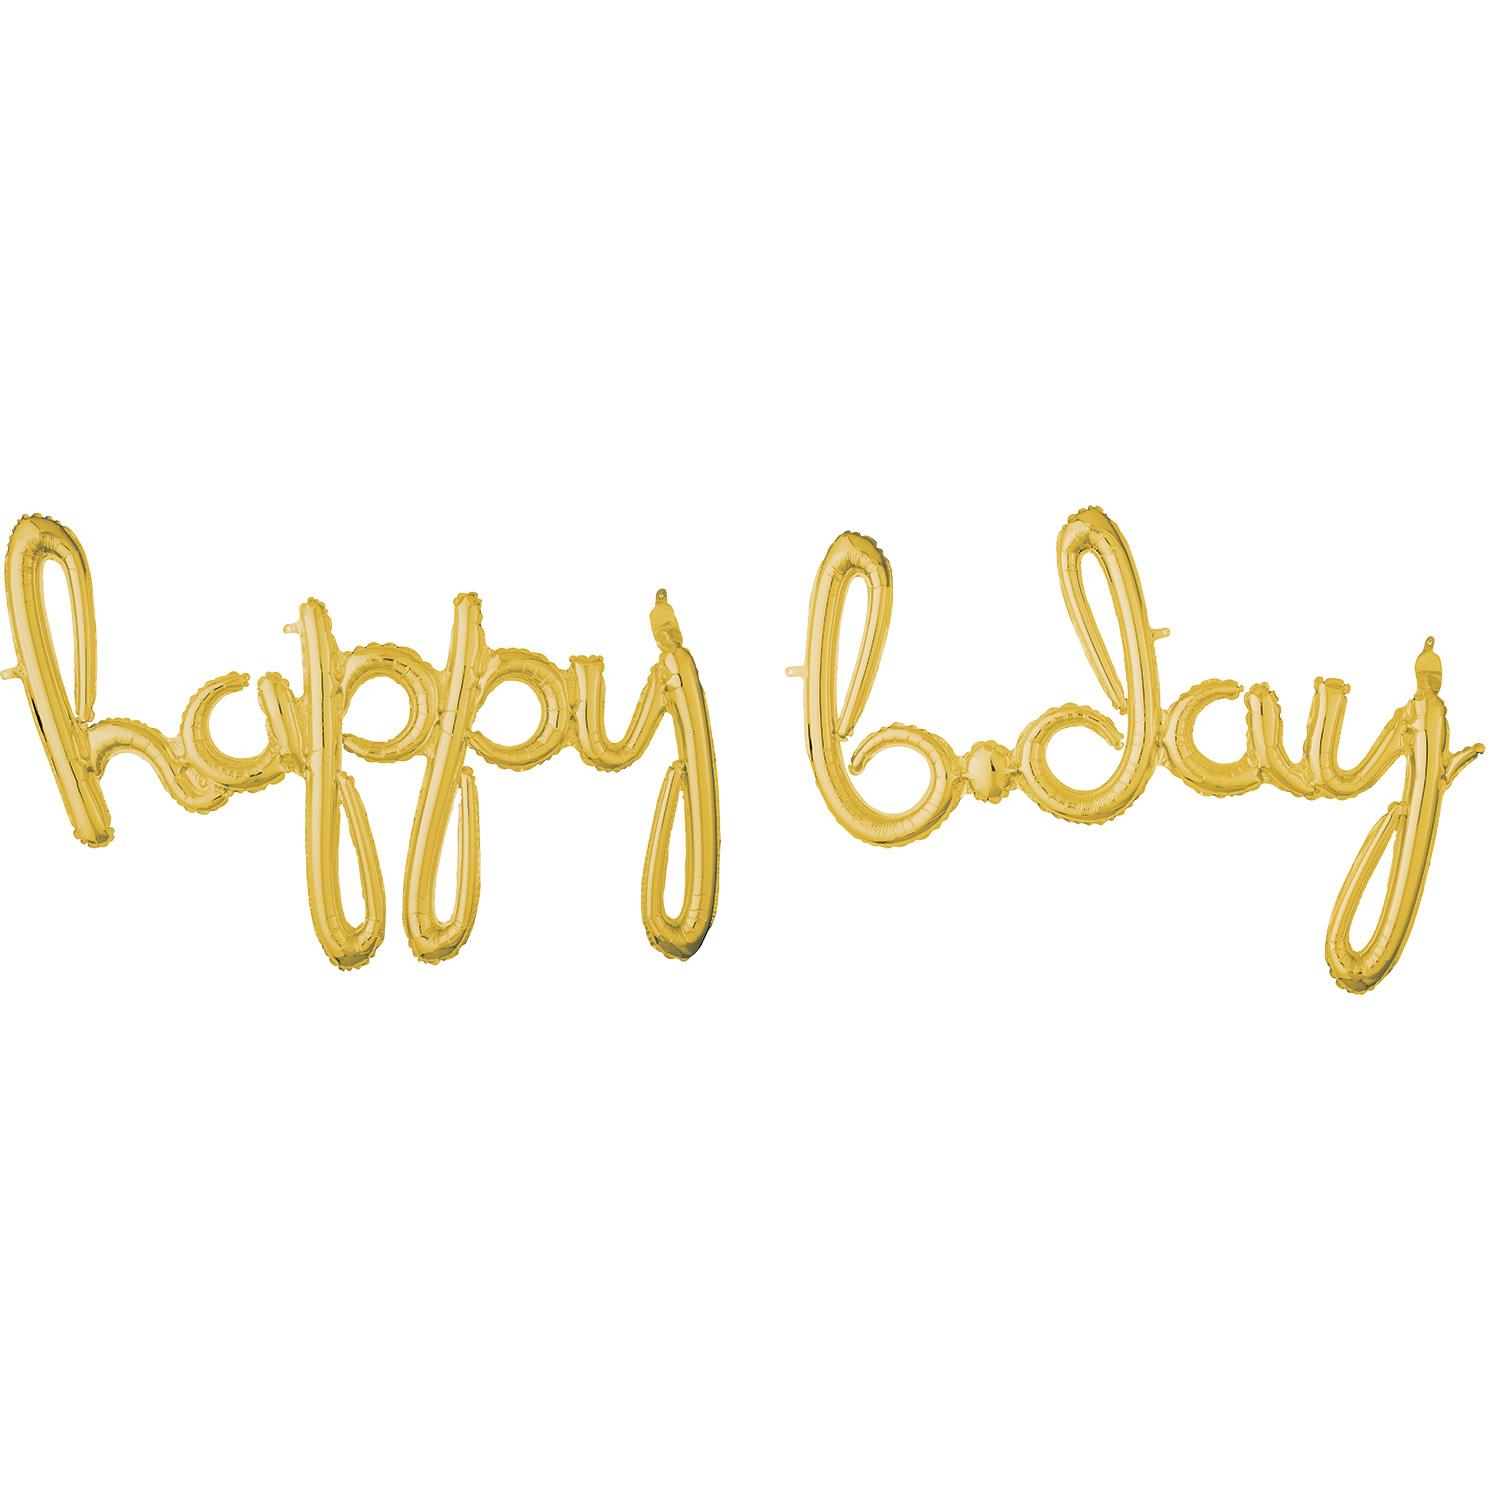 Happy Bday Script Phrase Gold Foil Balloon 88x63cm Balloons & Streamers - Party Centre